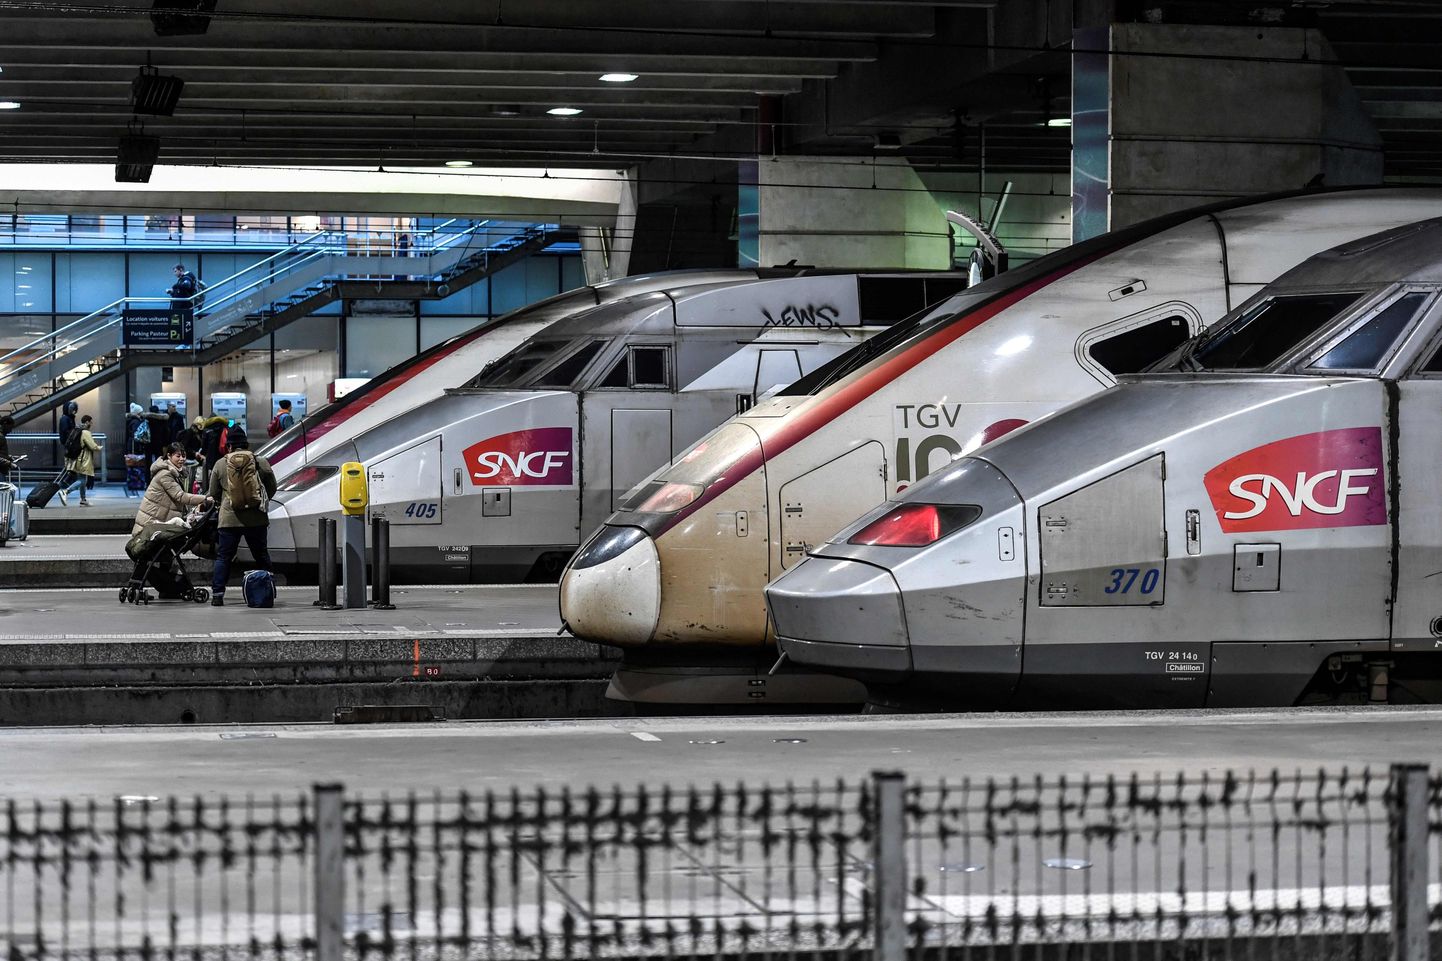 Streigi tõttu seisvad rongid Pariisi Gare Montparnasse'i raudteejaamas.